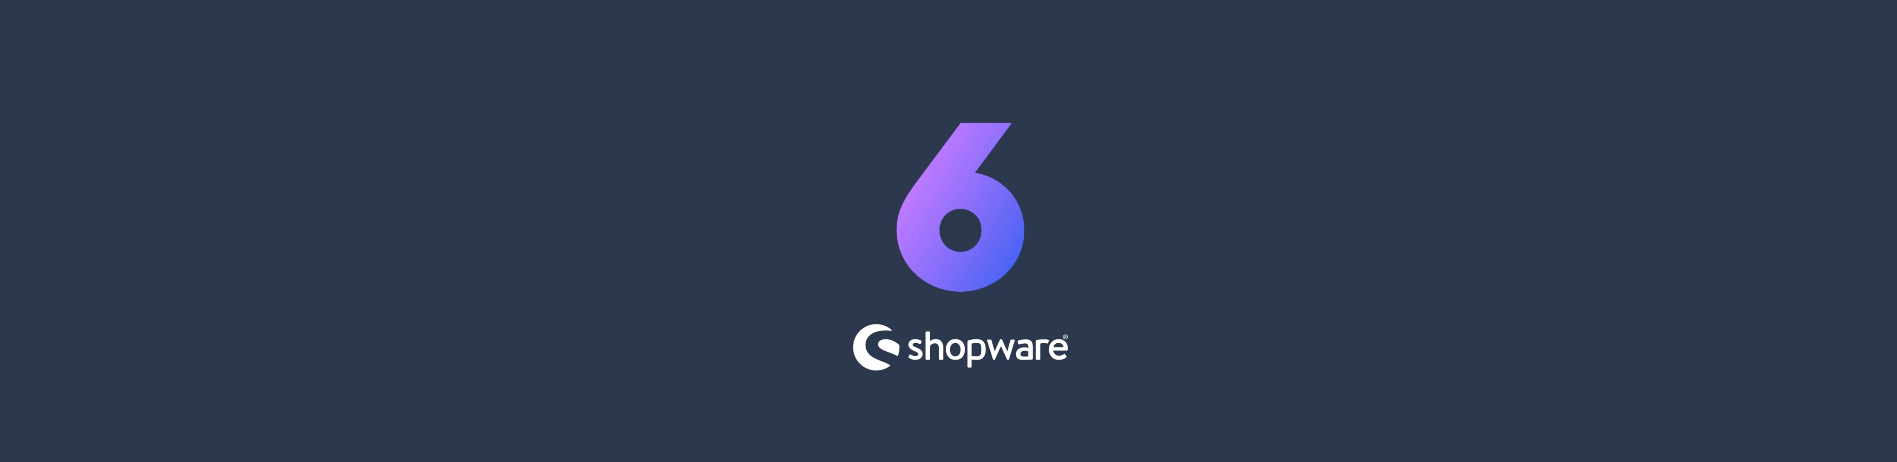 Shopware 6